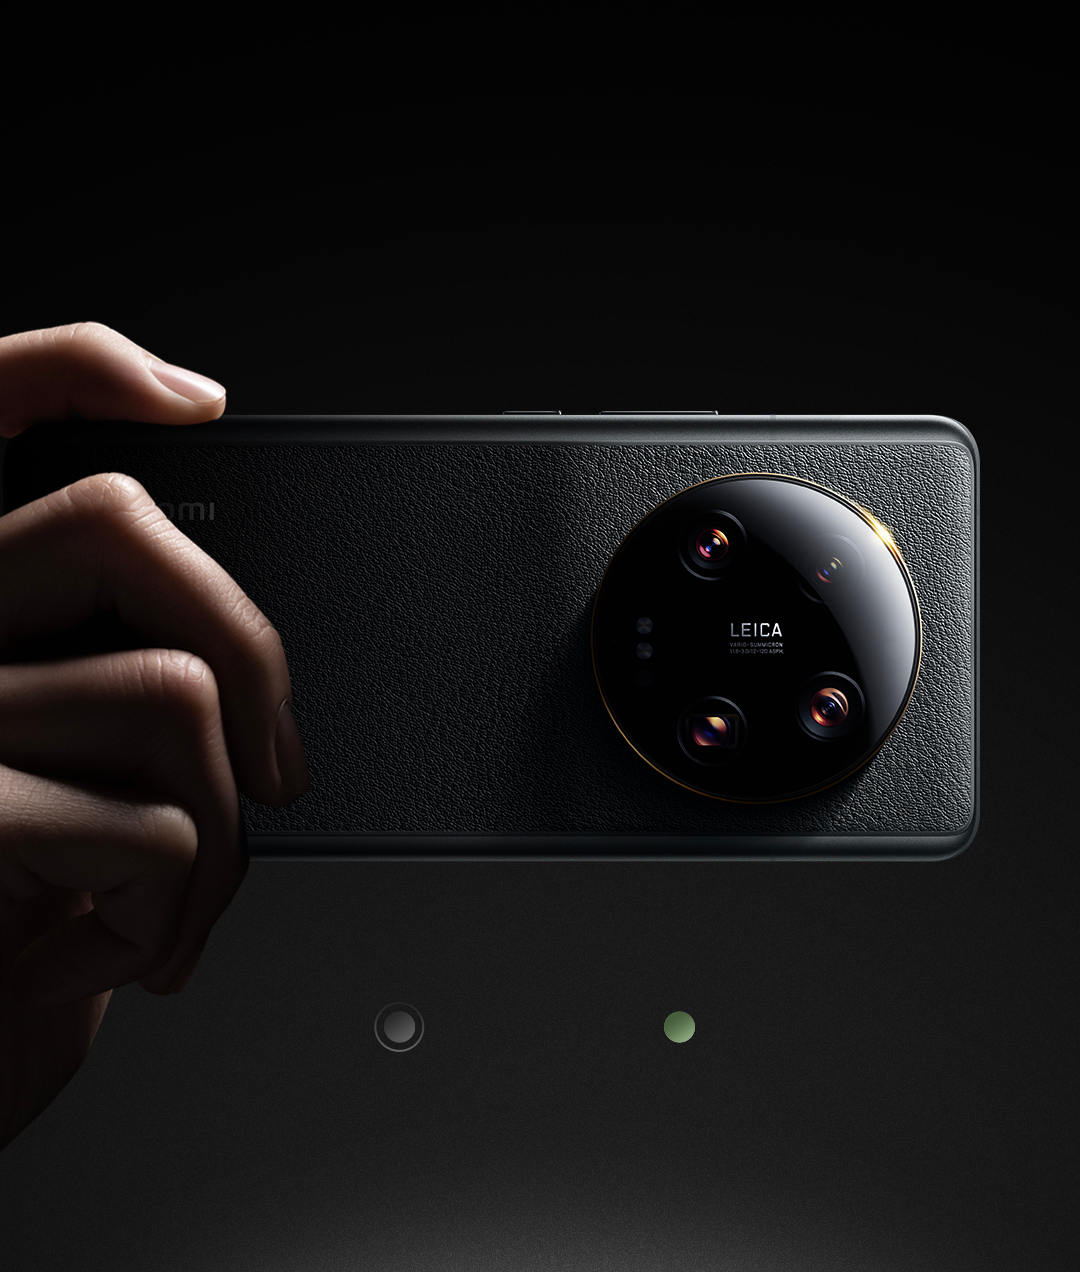 Xiaomi 13 Ultra Camera Kit Review